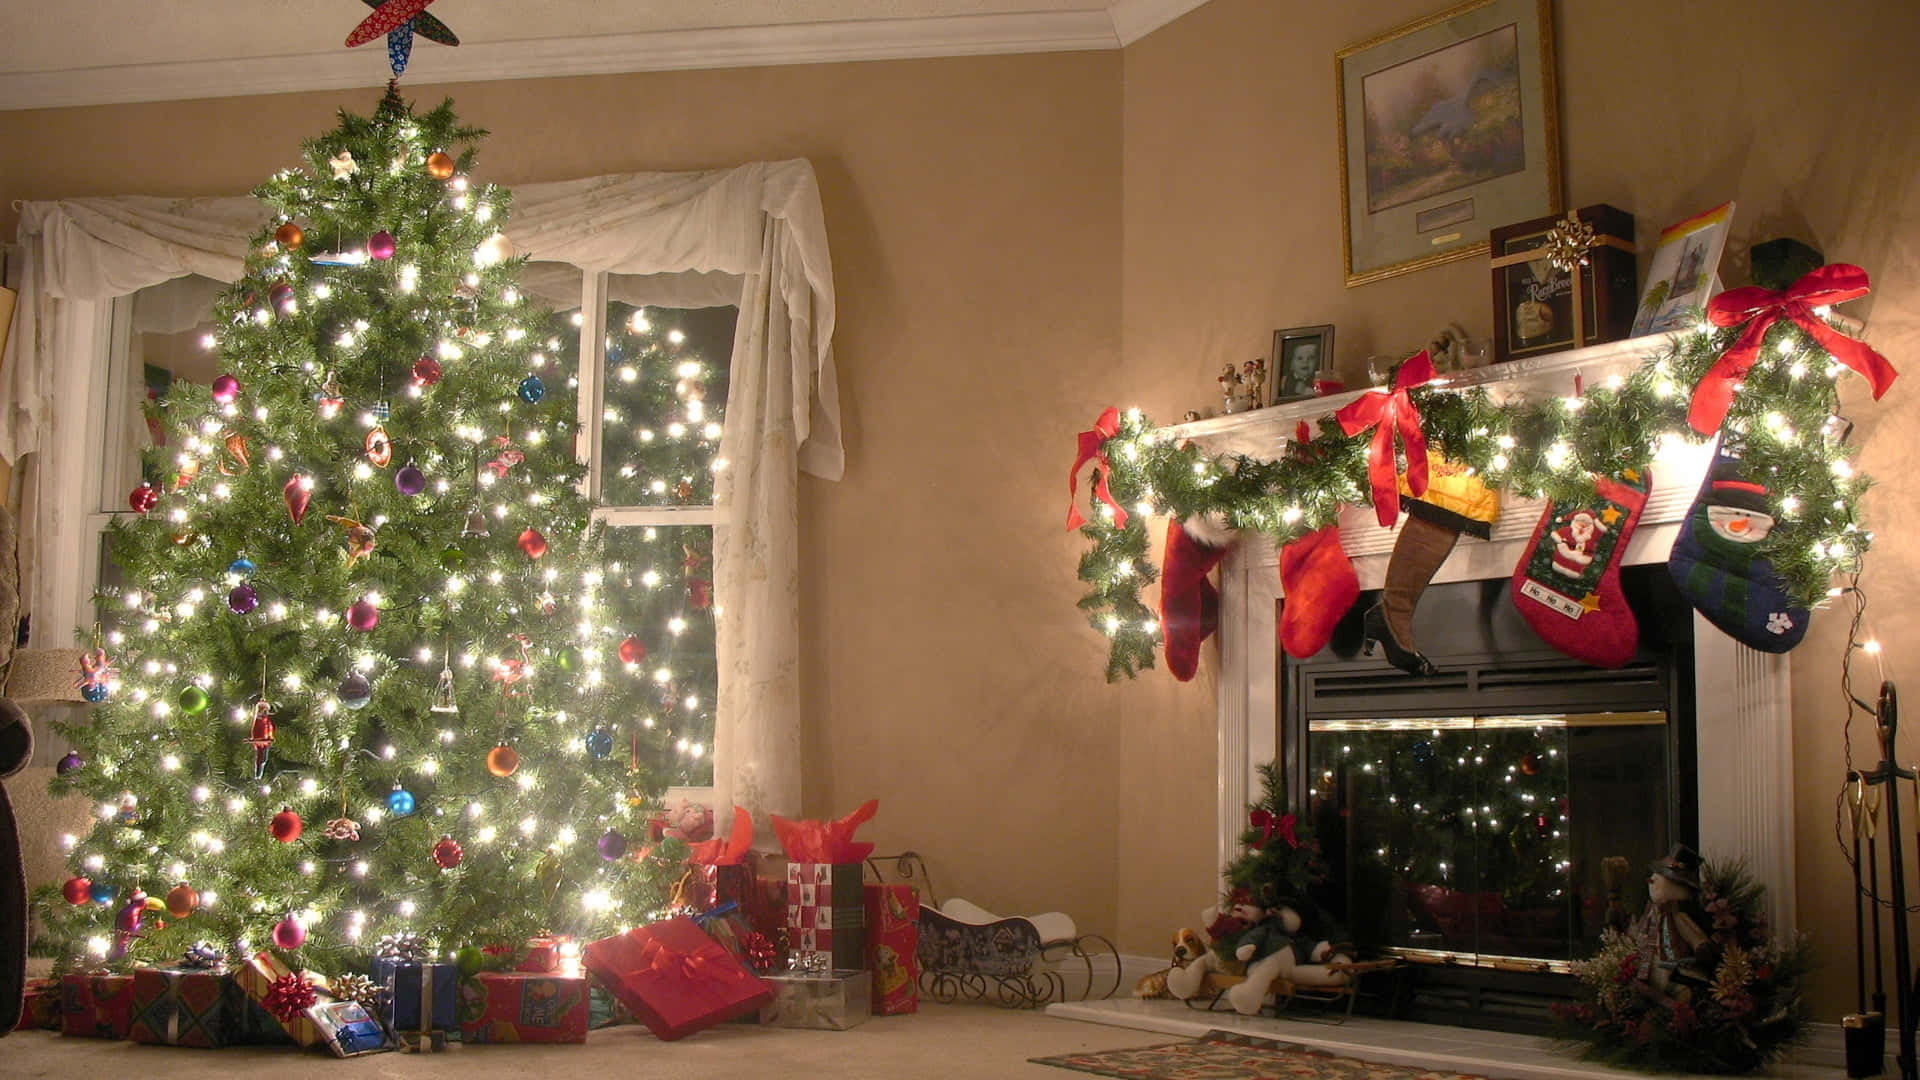 Image  A Cozy Christmas Living Room